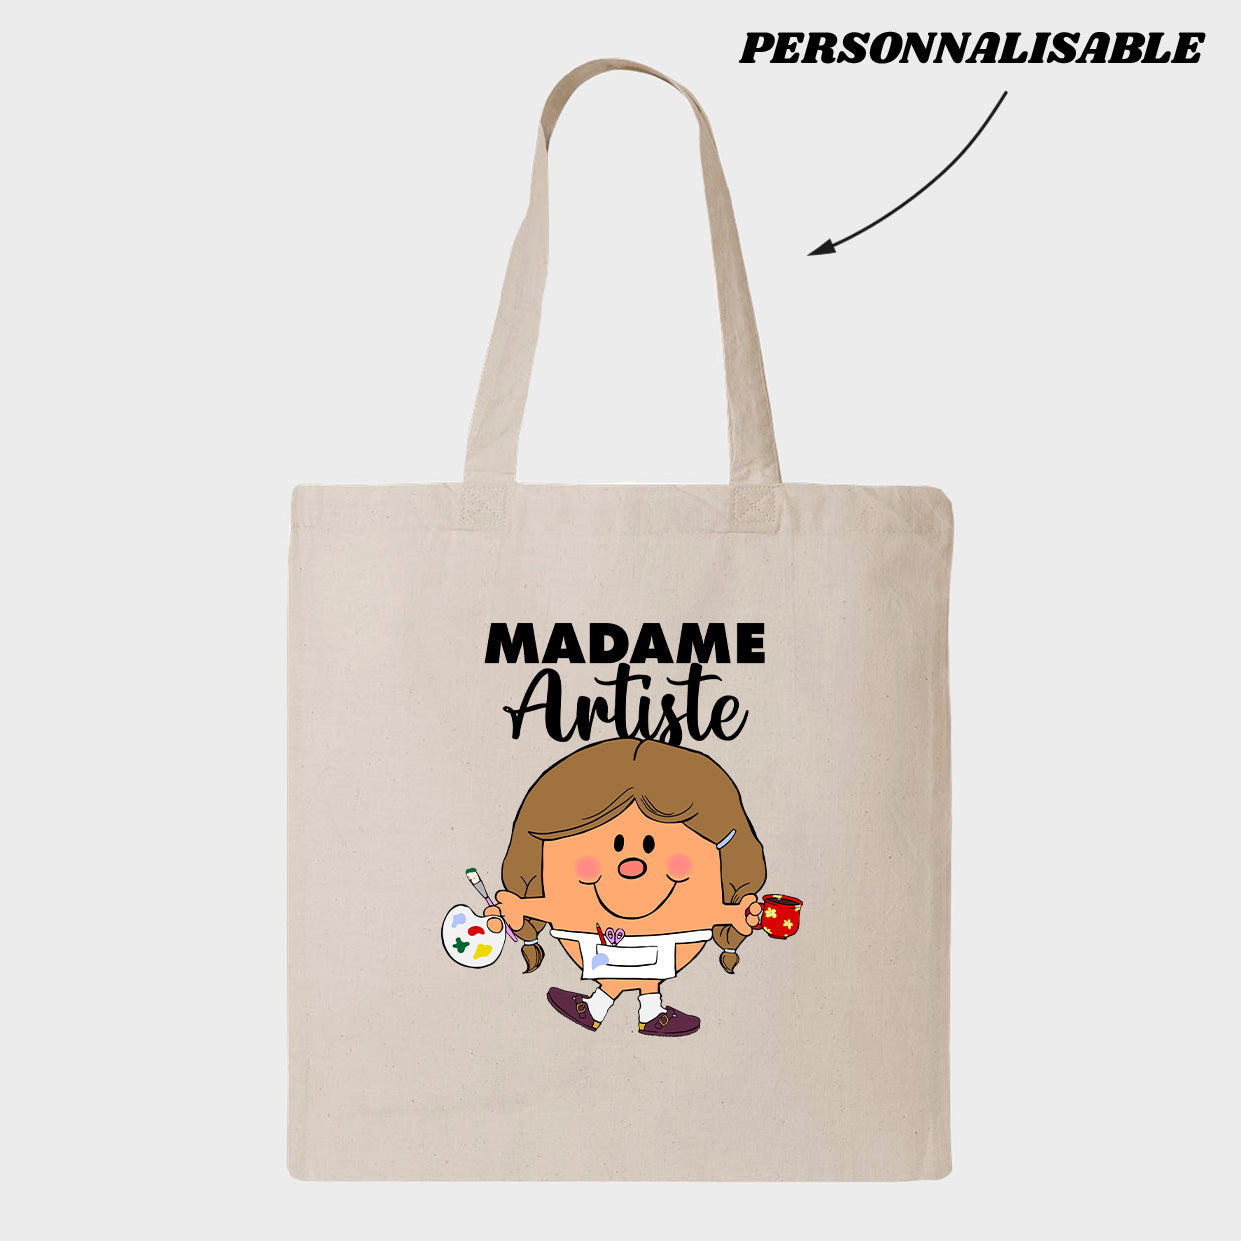 MADAME *ARTISTE* tote bag personnalisable - tamelo boutique